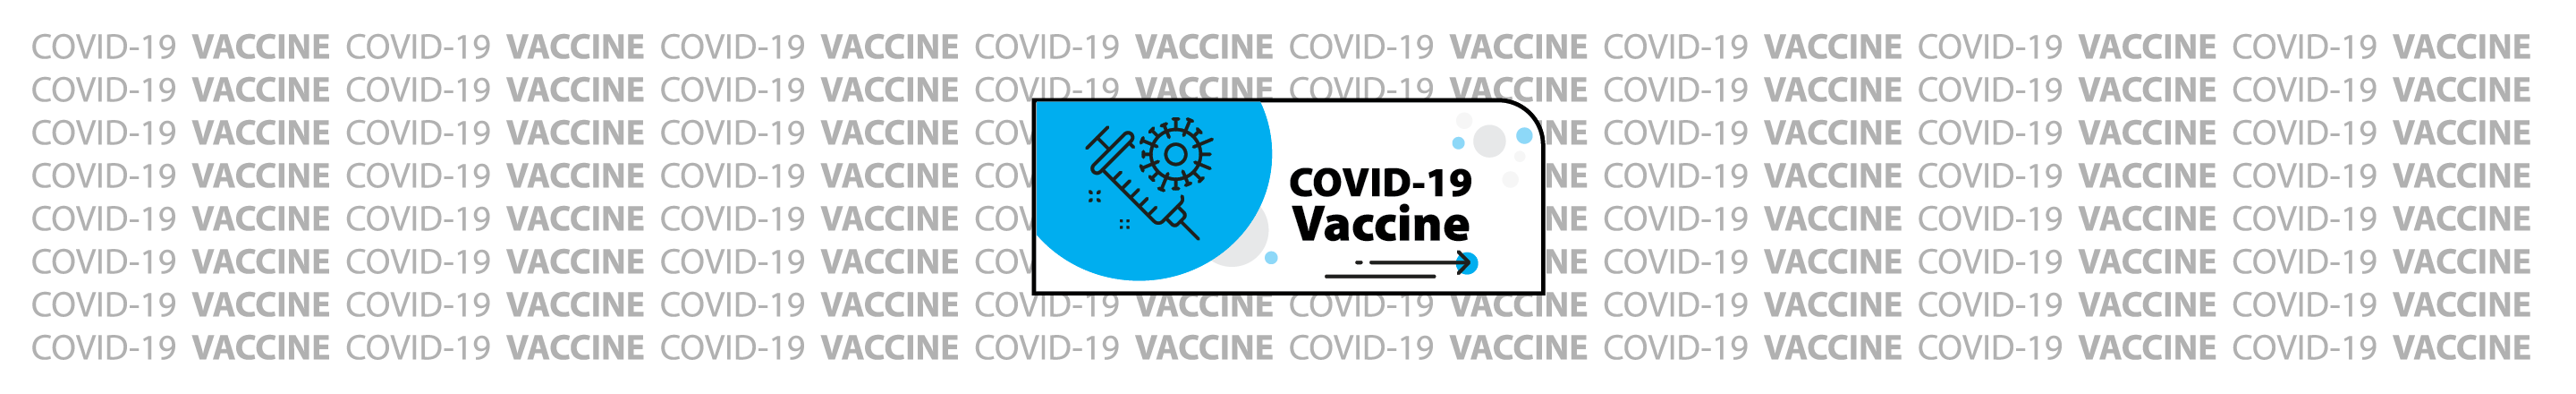 Covid-19 Vaccine Information